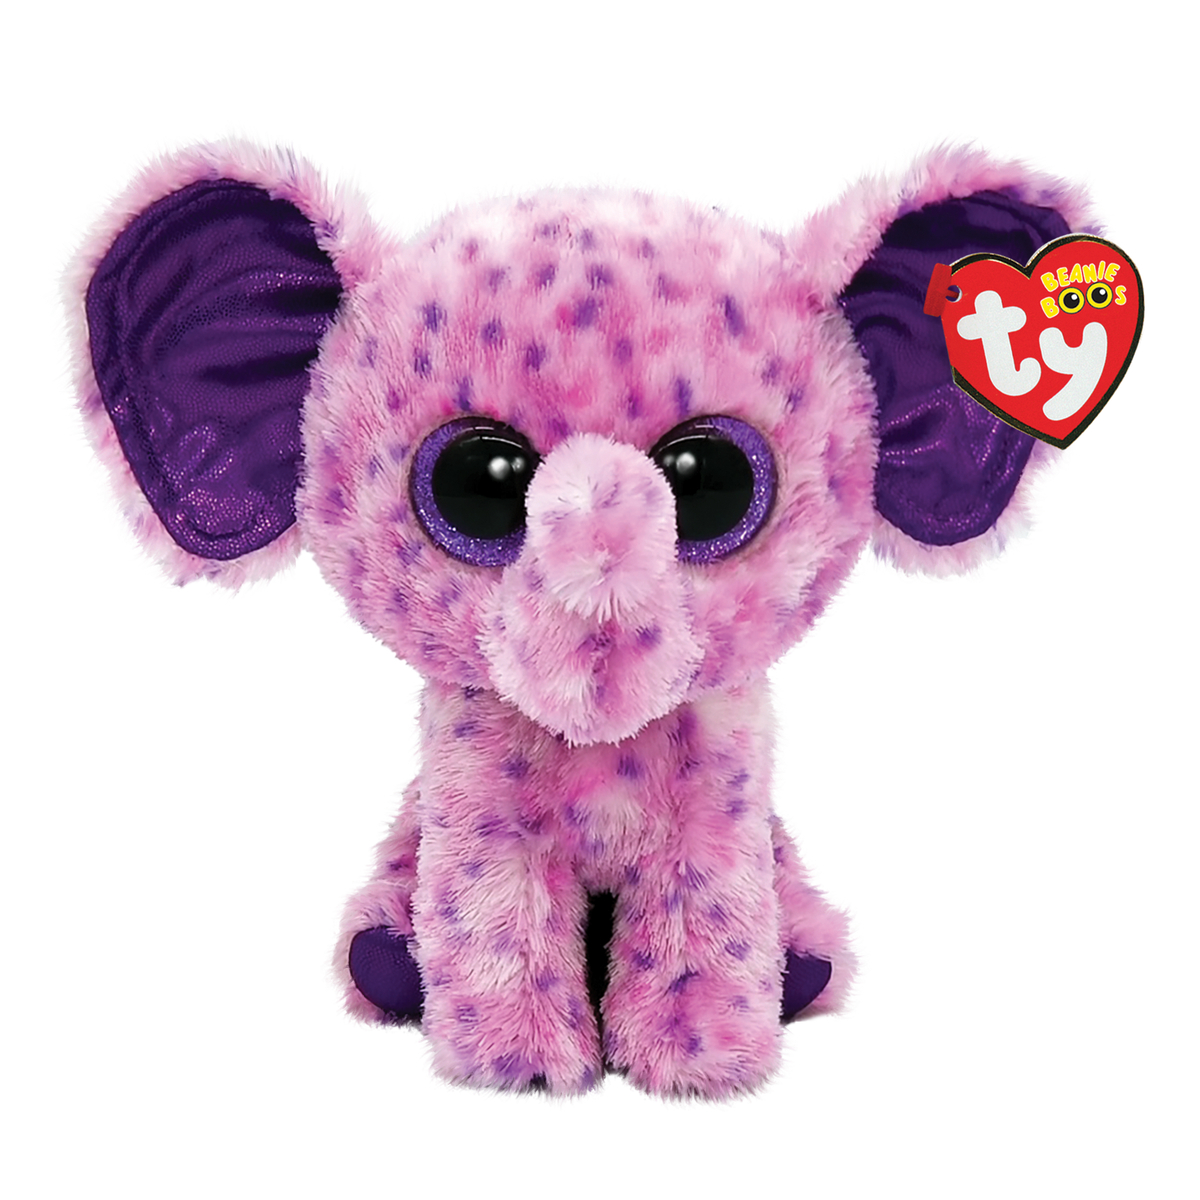 Ty Beanie Boo Regular Eva Elephant - Minds Alive! Toys Crafts Books